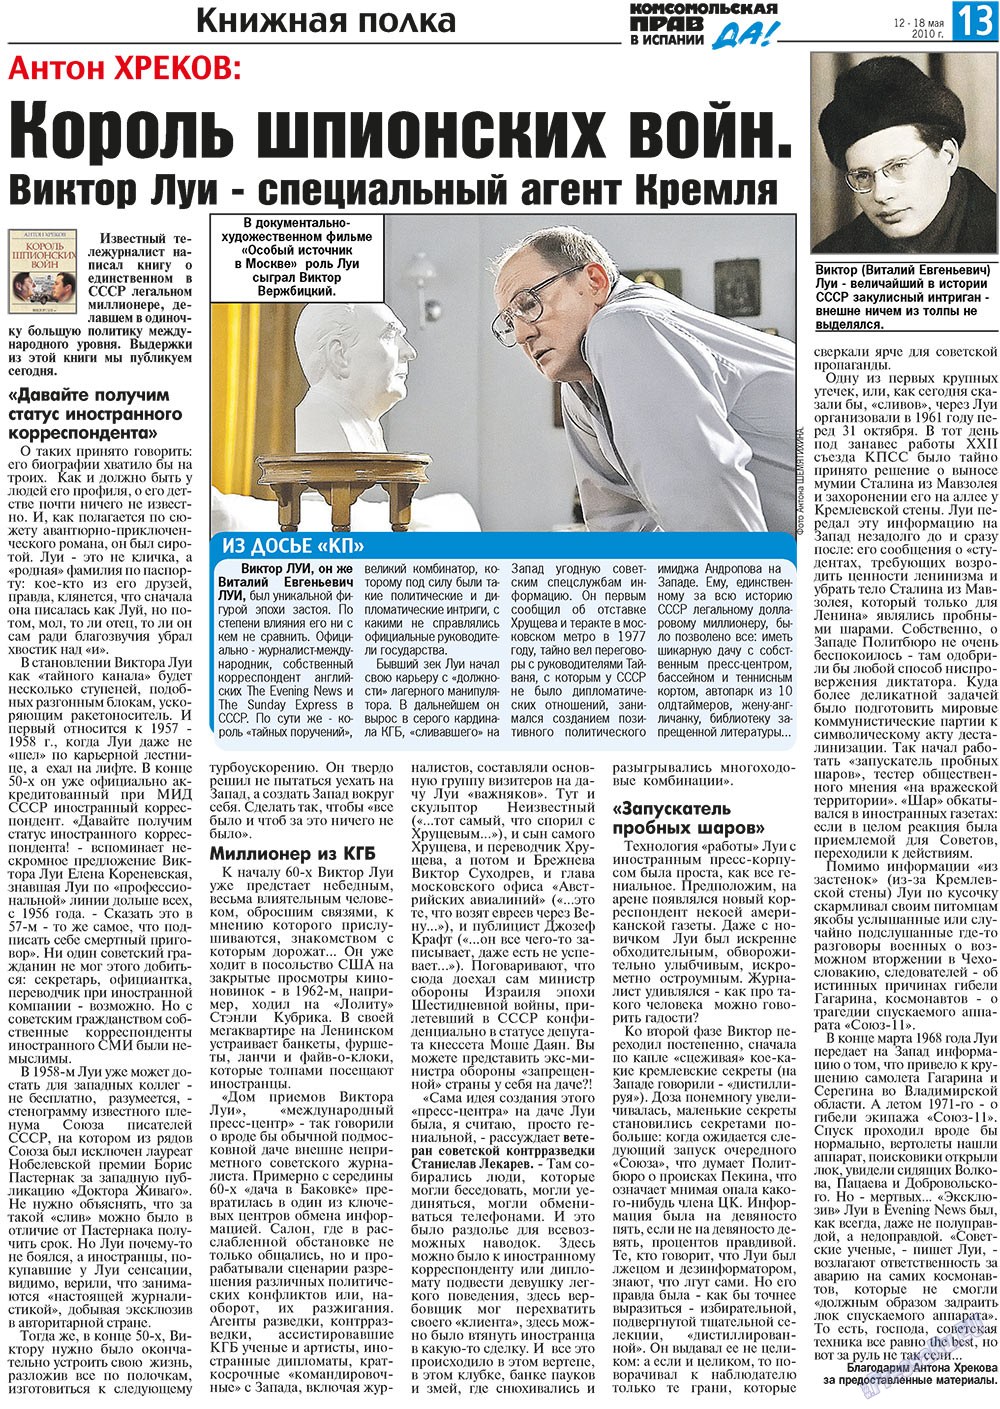 КП Испания (газета). 2010 год, номер 19, стр. 13